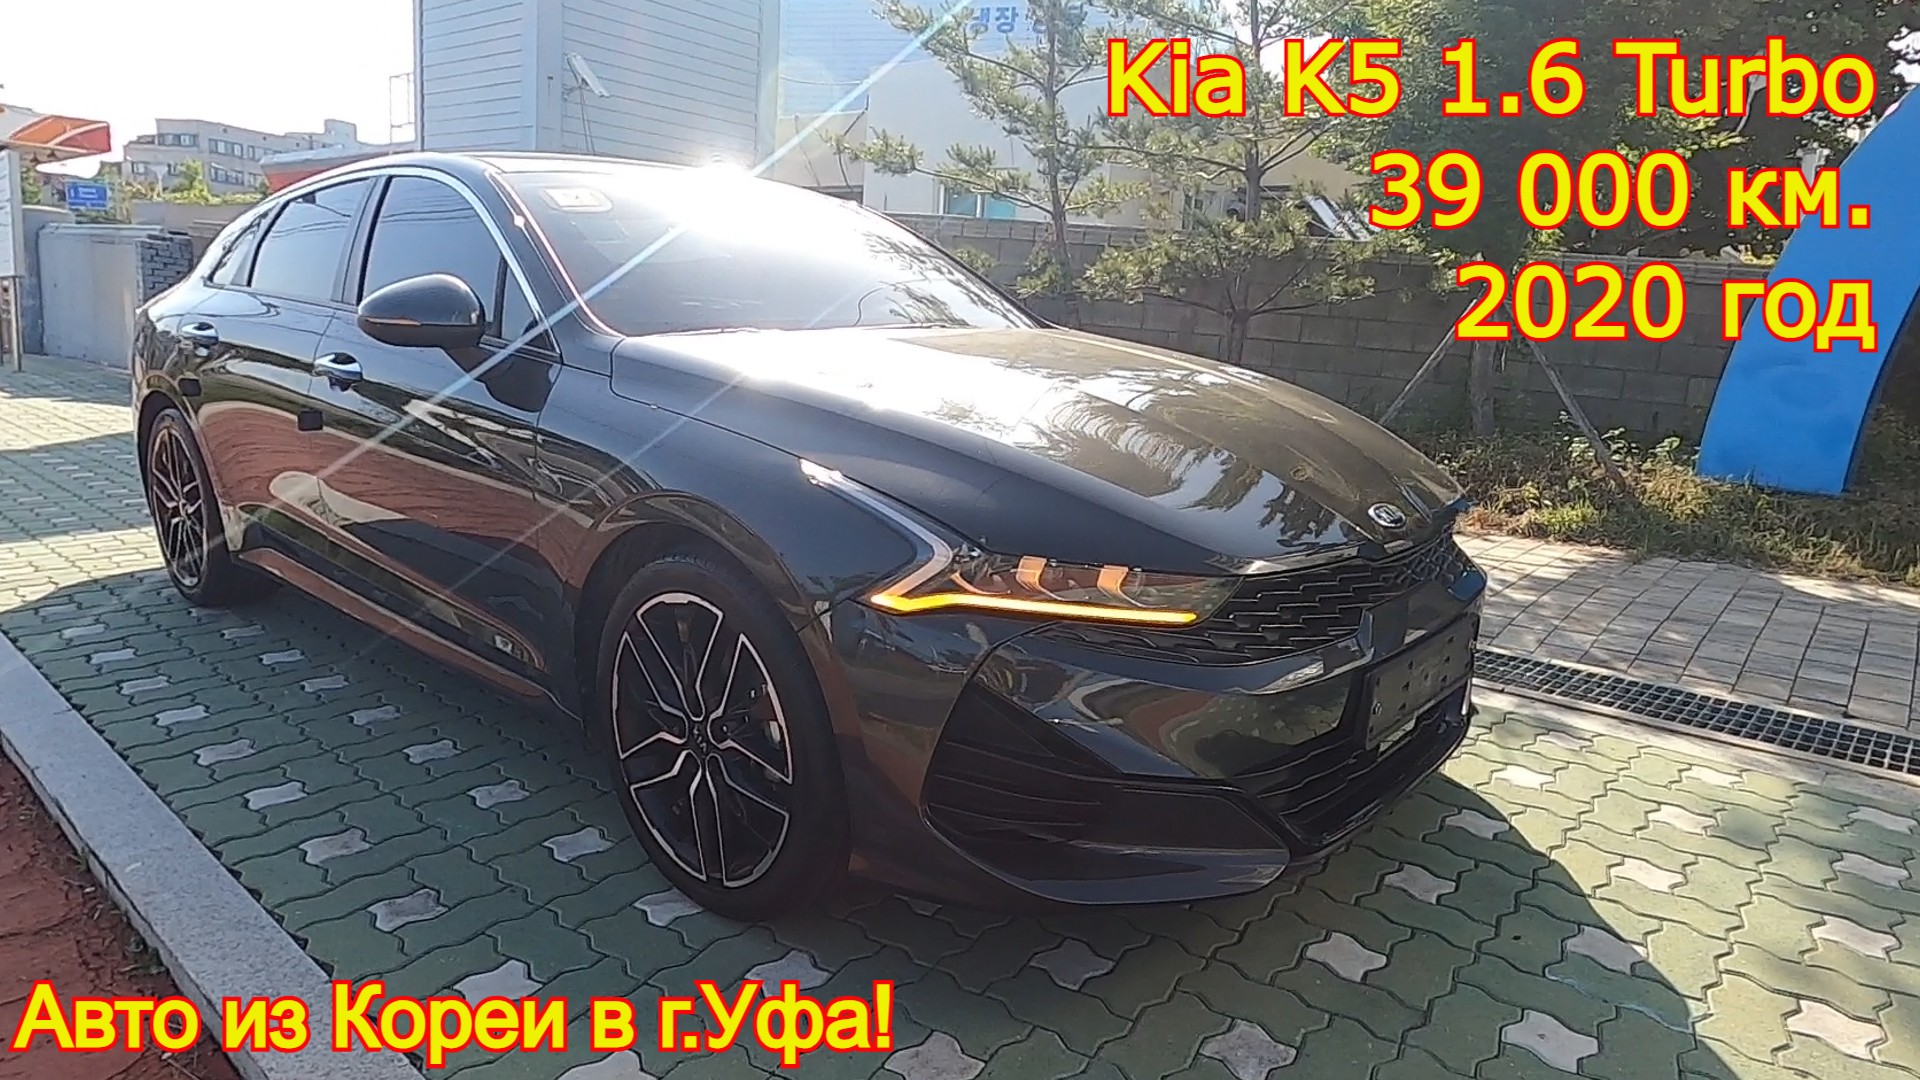 Авто из Кореи в г.Уфу - Kia K5, 2020 год, 39 000 км., 1.6 Turbo!